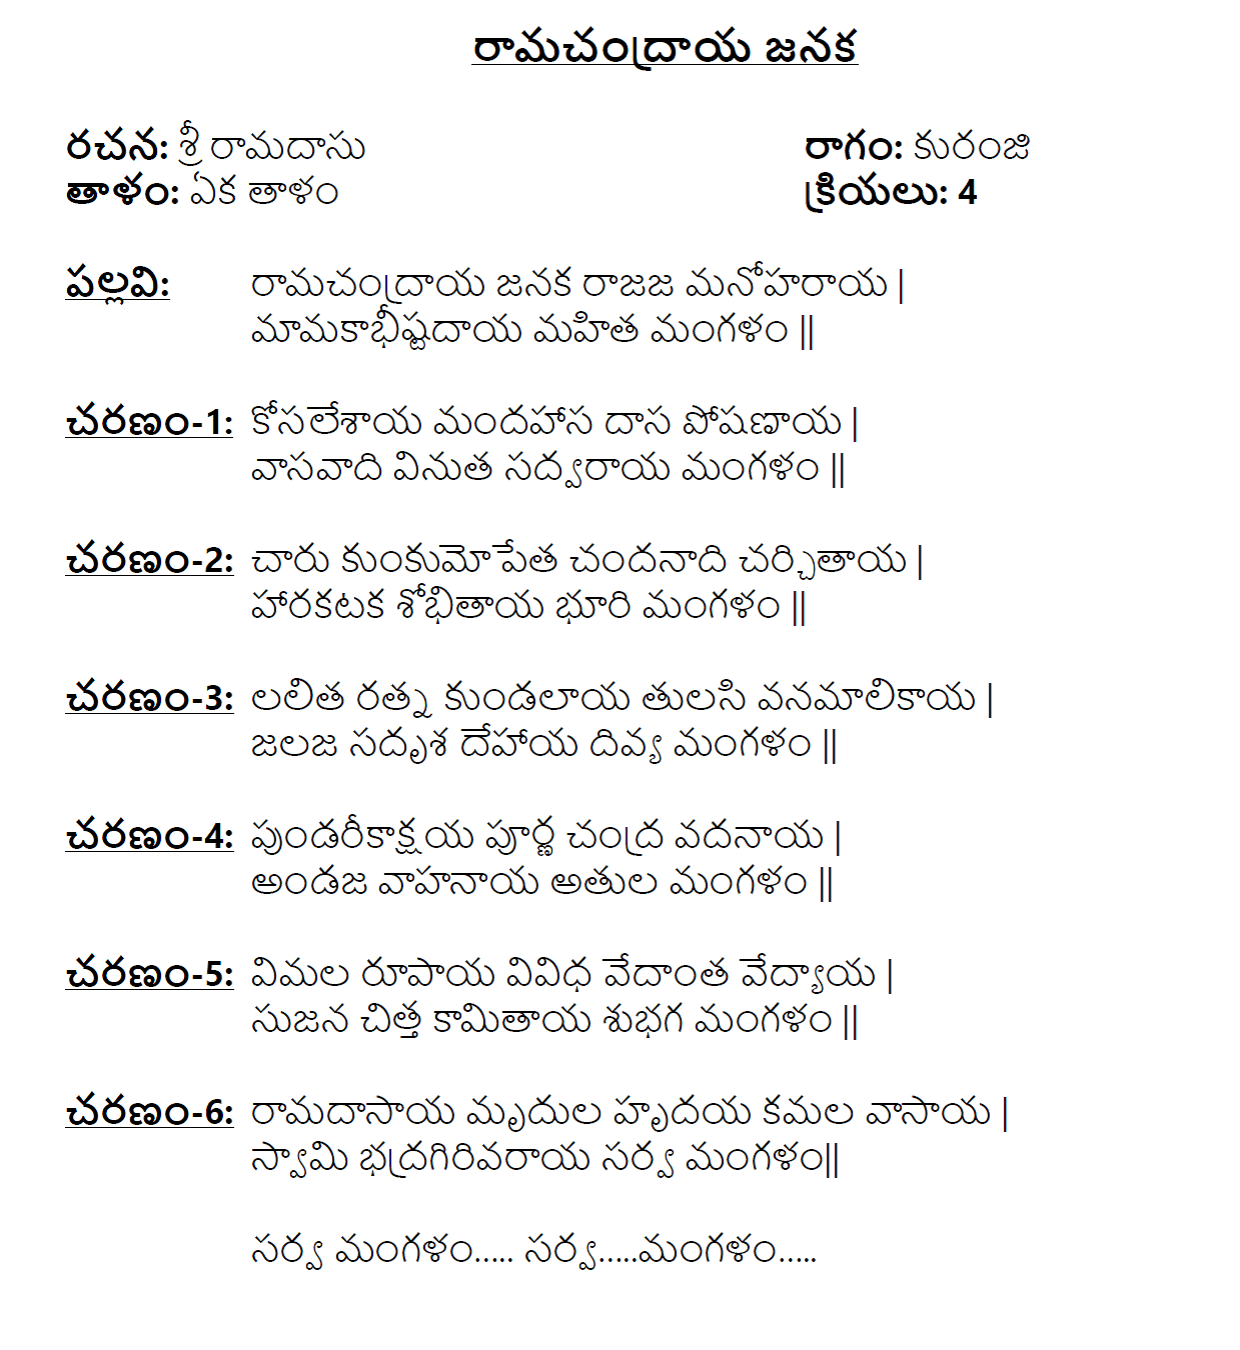 Ramachandraya janaka song lyrics in telugu